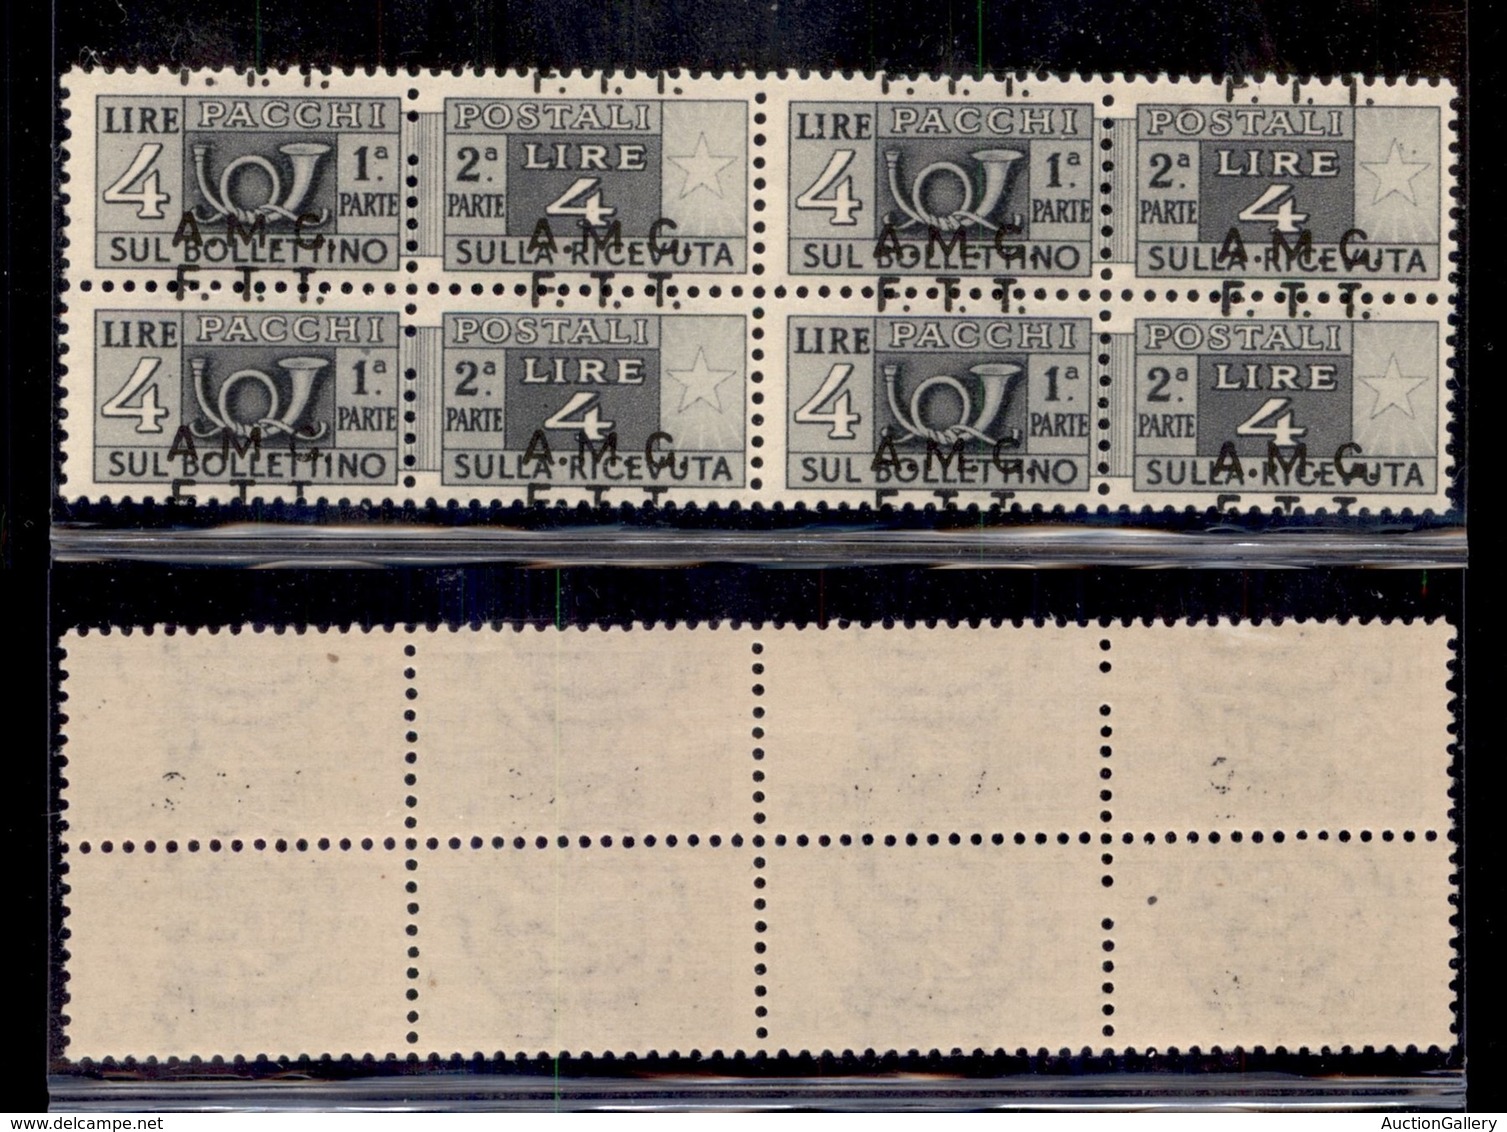 TRIESTE - AMG-FTT - 1947 - 4 Lire Pacchi Postali (4 G) - Quartina Con Soprastampa Spostata In Senso Verticale - Gomma In - Ungebraucht